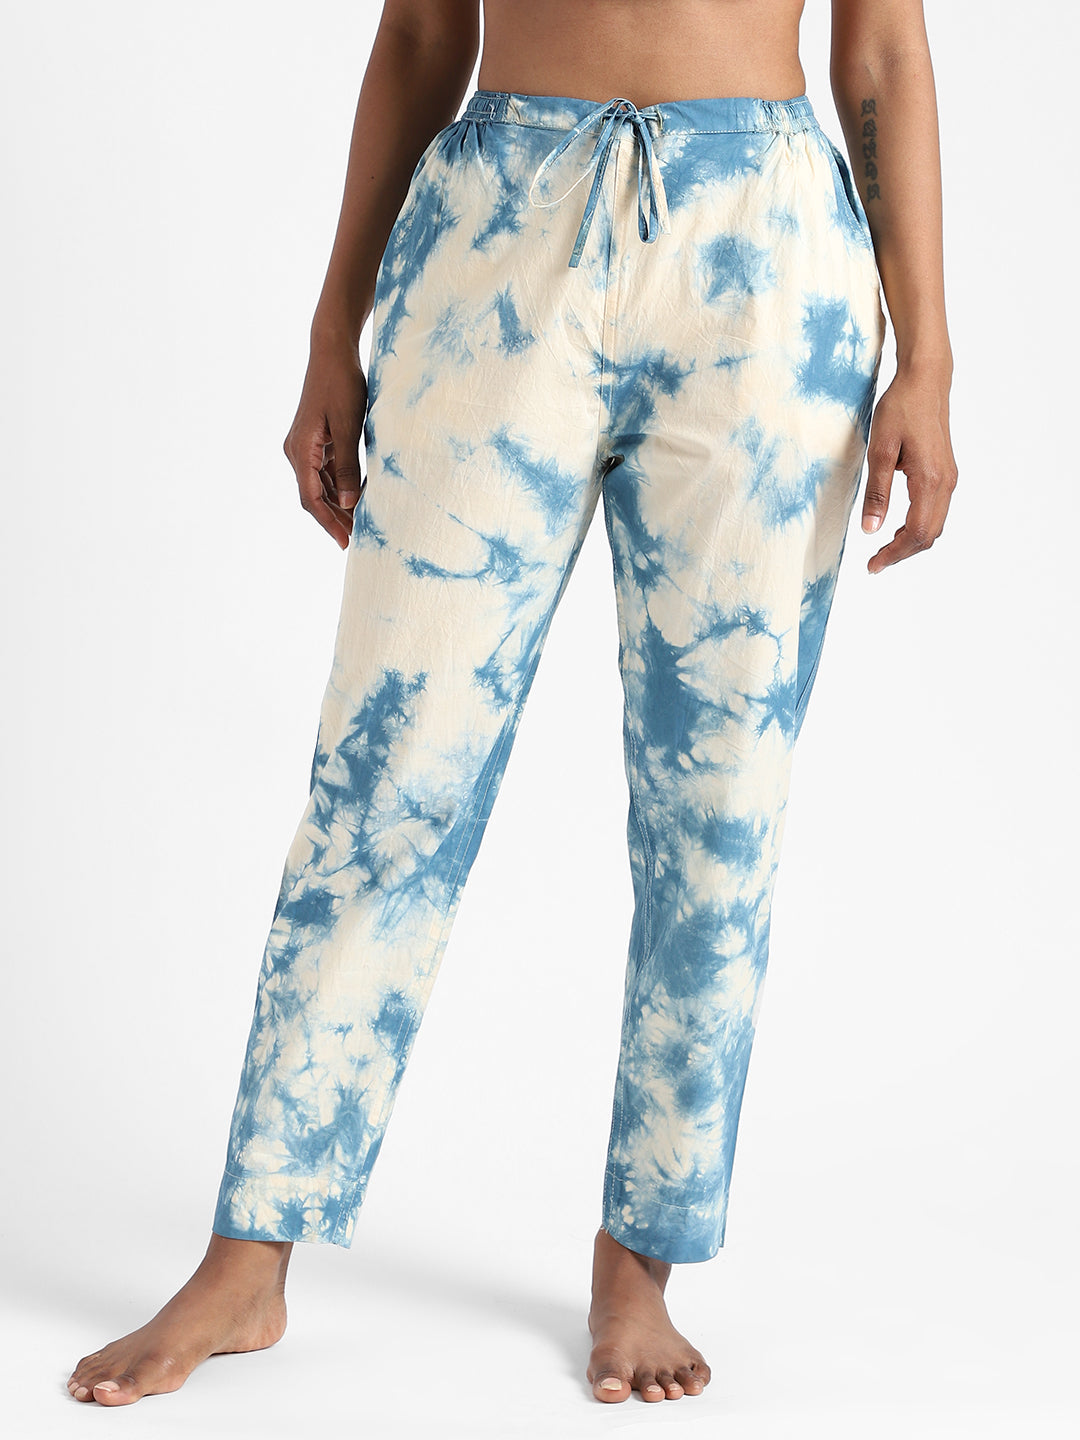 Indigo Blue Women's Organic Cotton & Natural Dyed Slim Fit Tie & Dye Pants